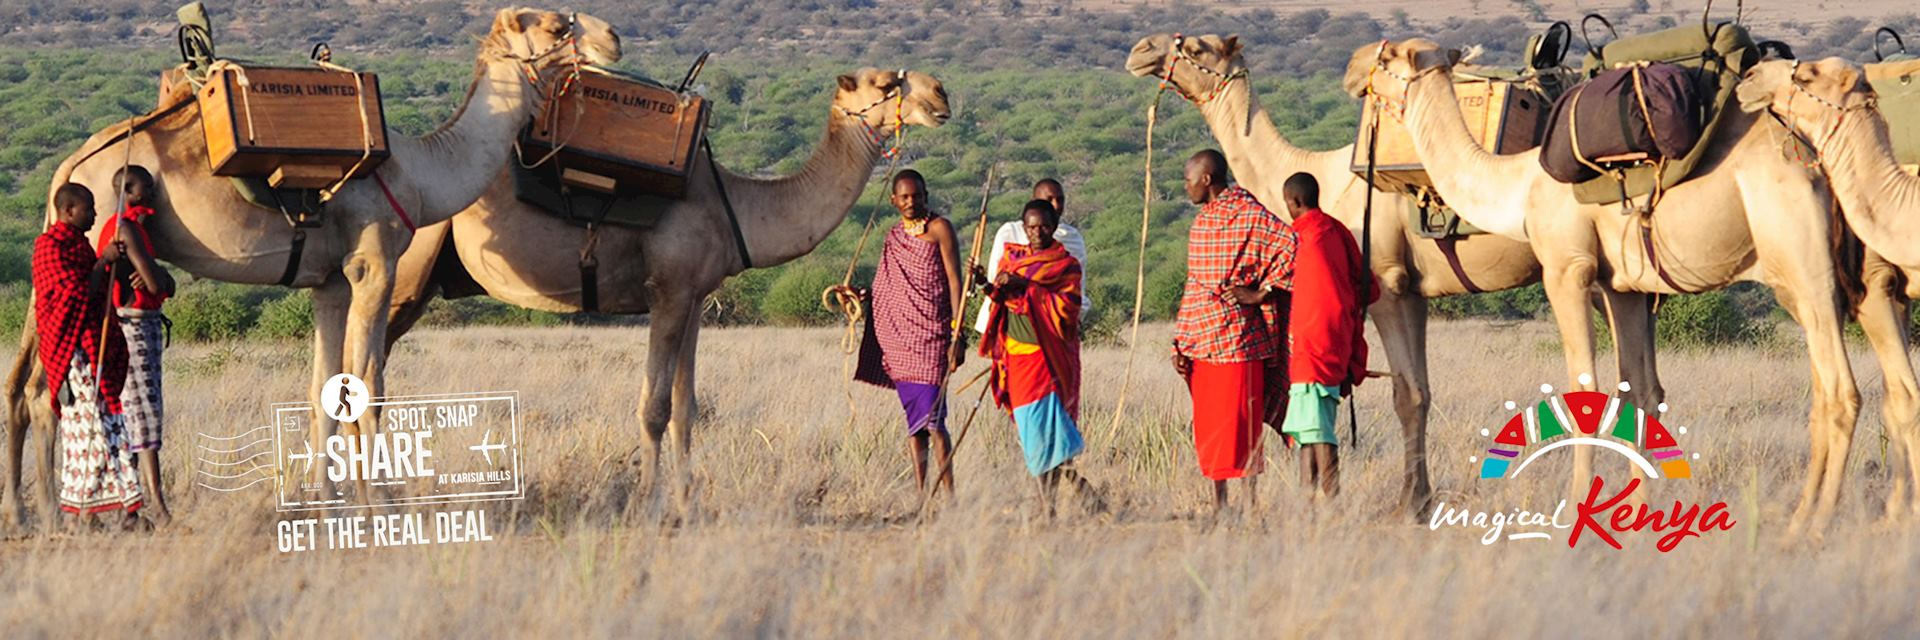 Laikipia Plateau in Kenya